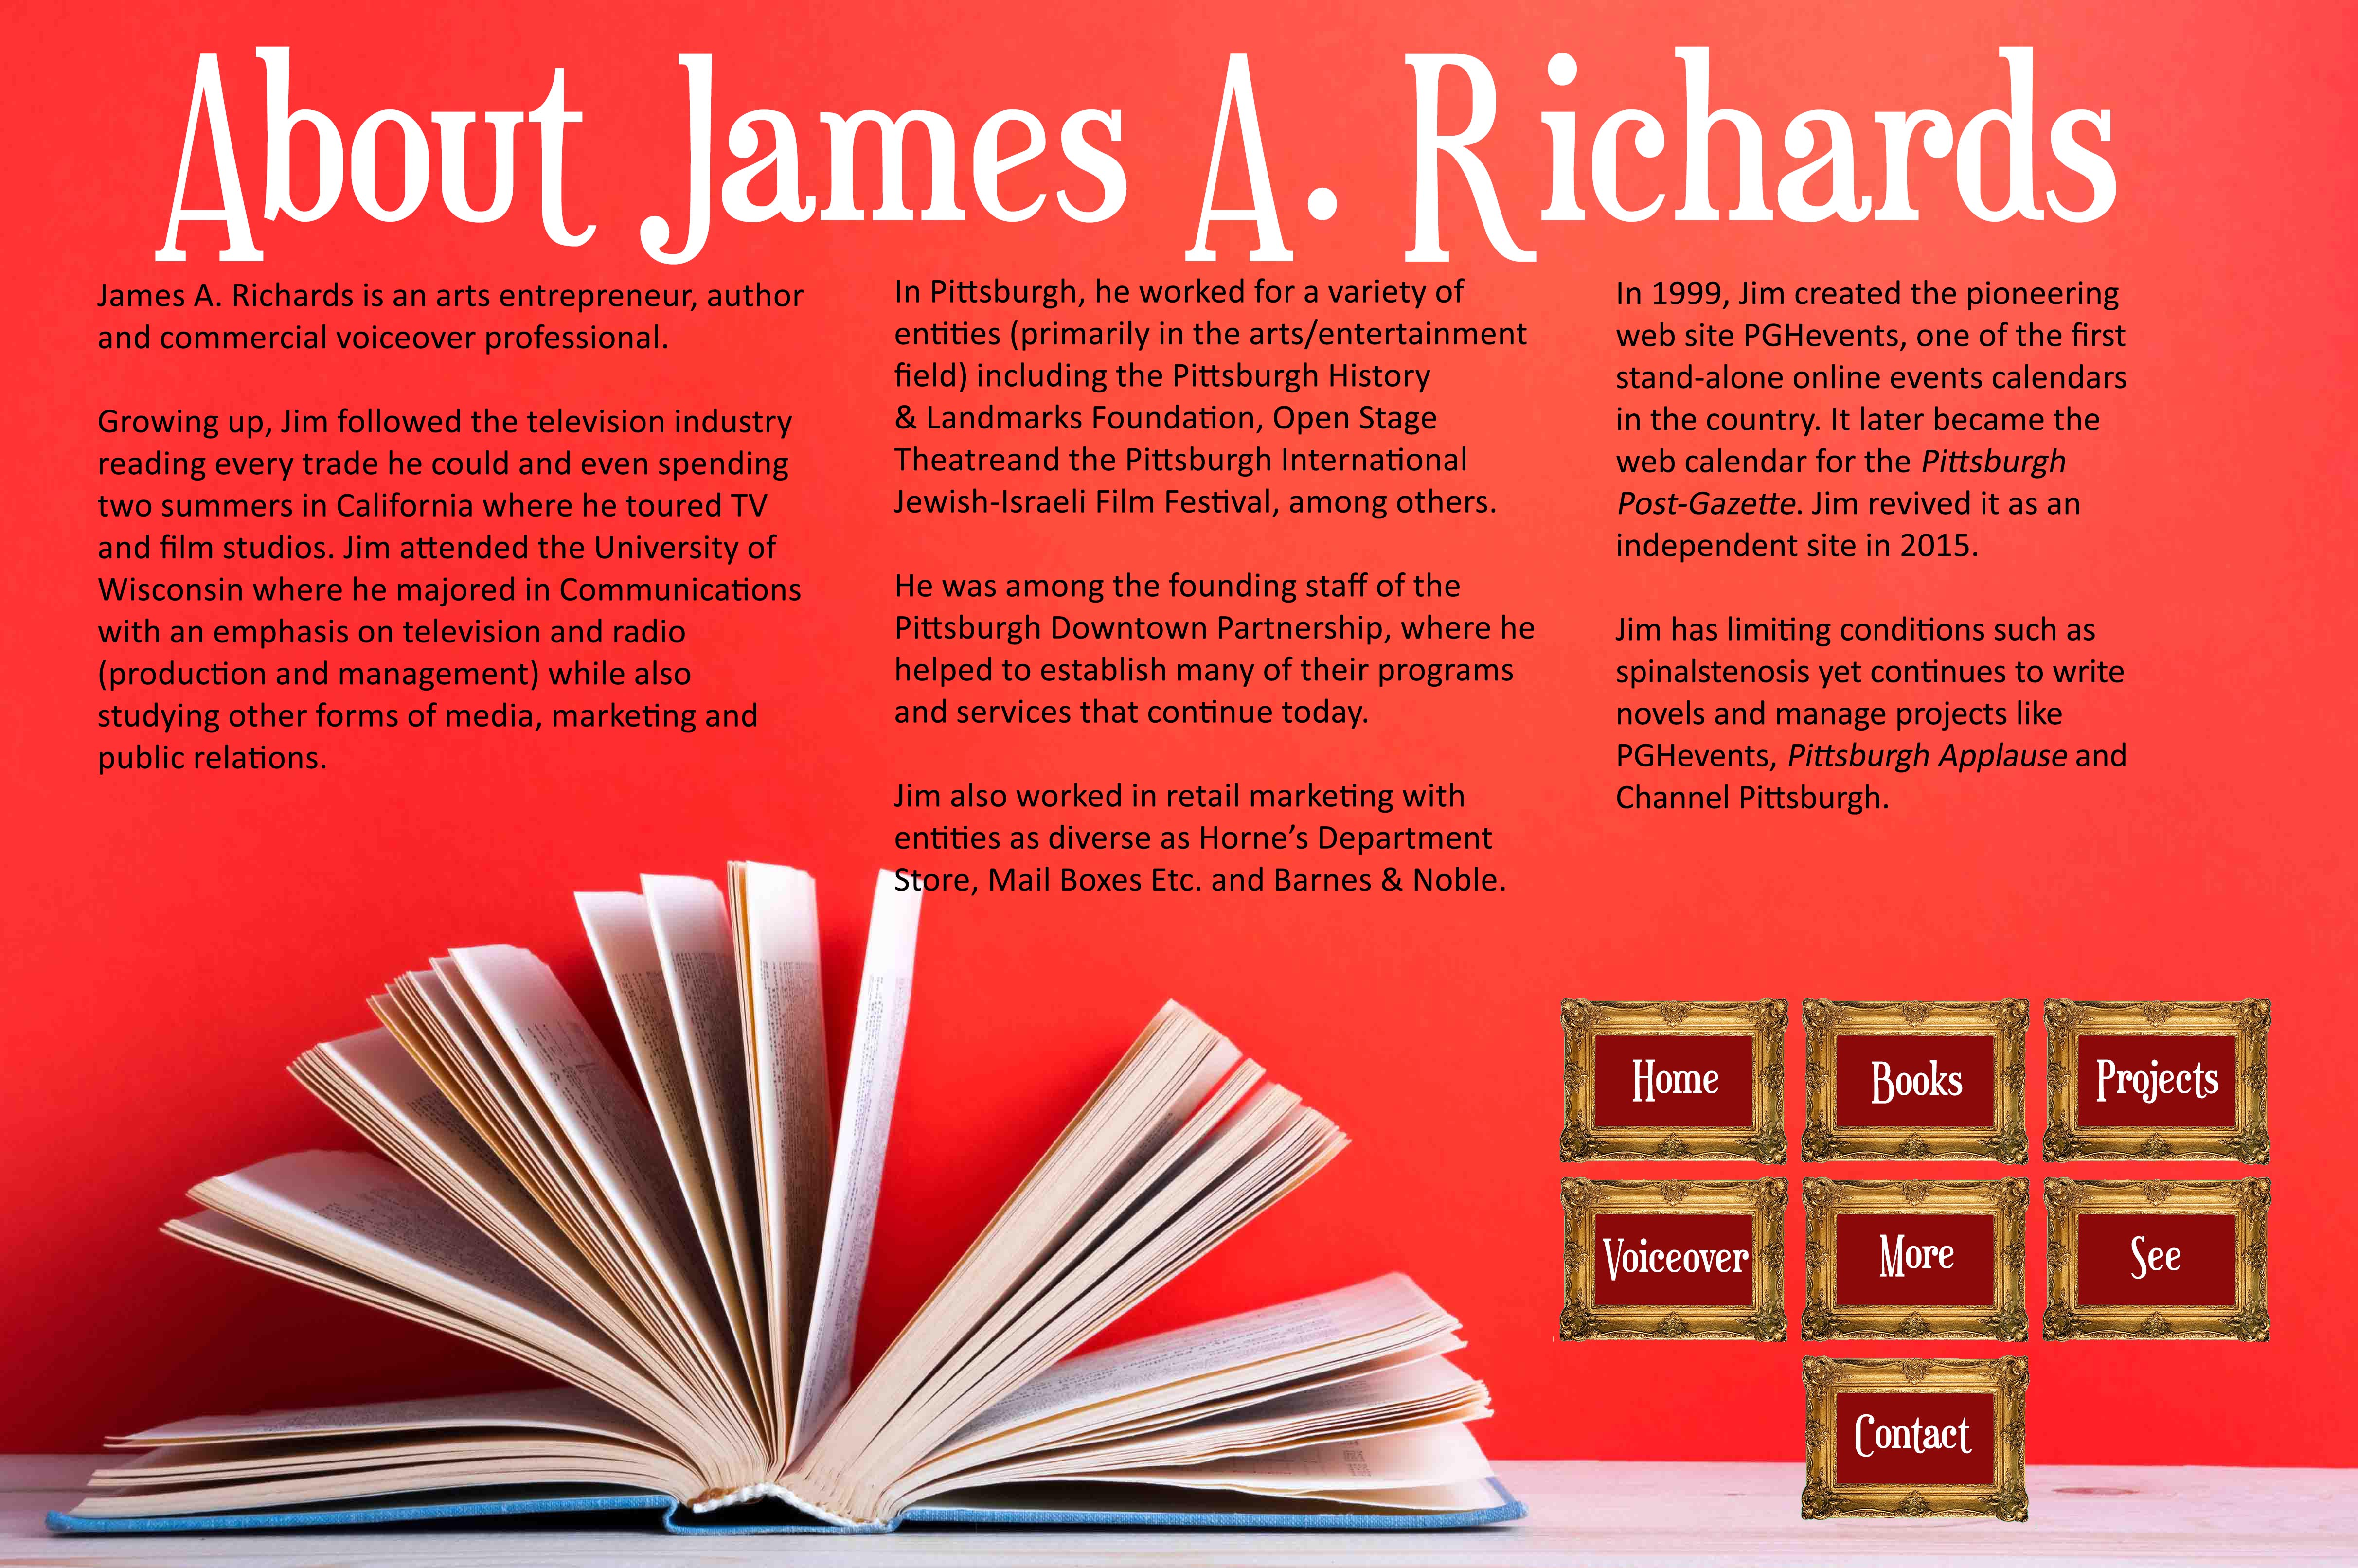 About James A Richards